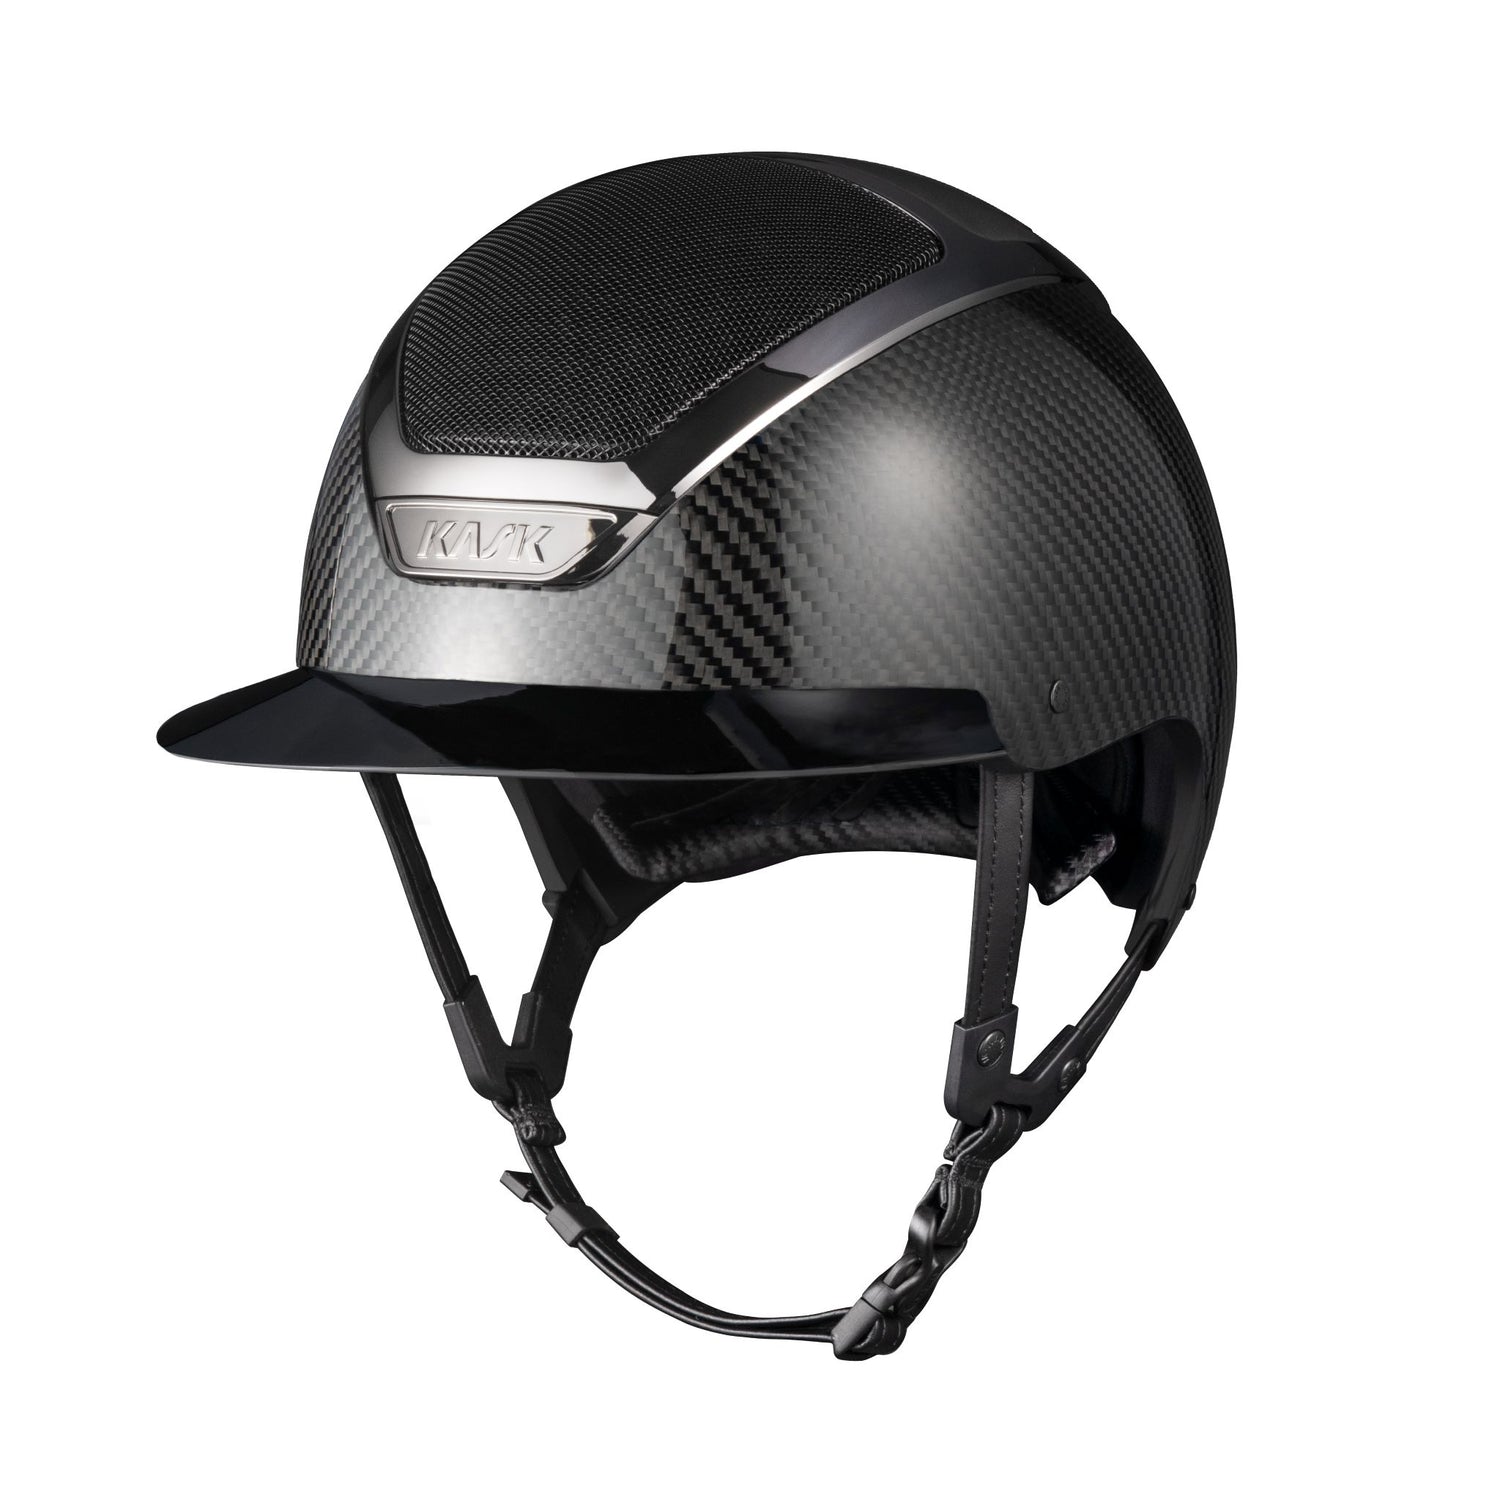 KASK riding helmet carbon shine